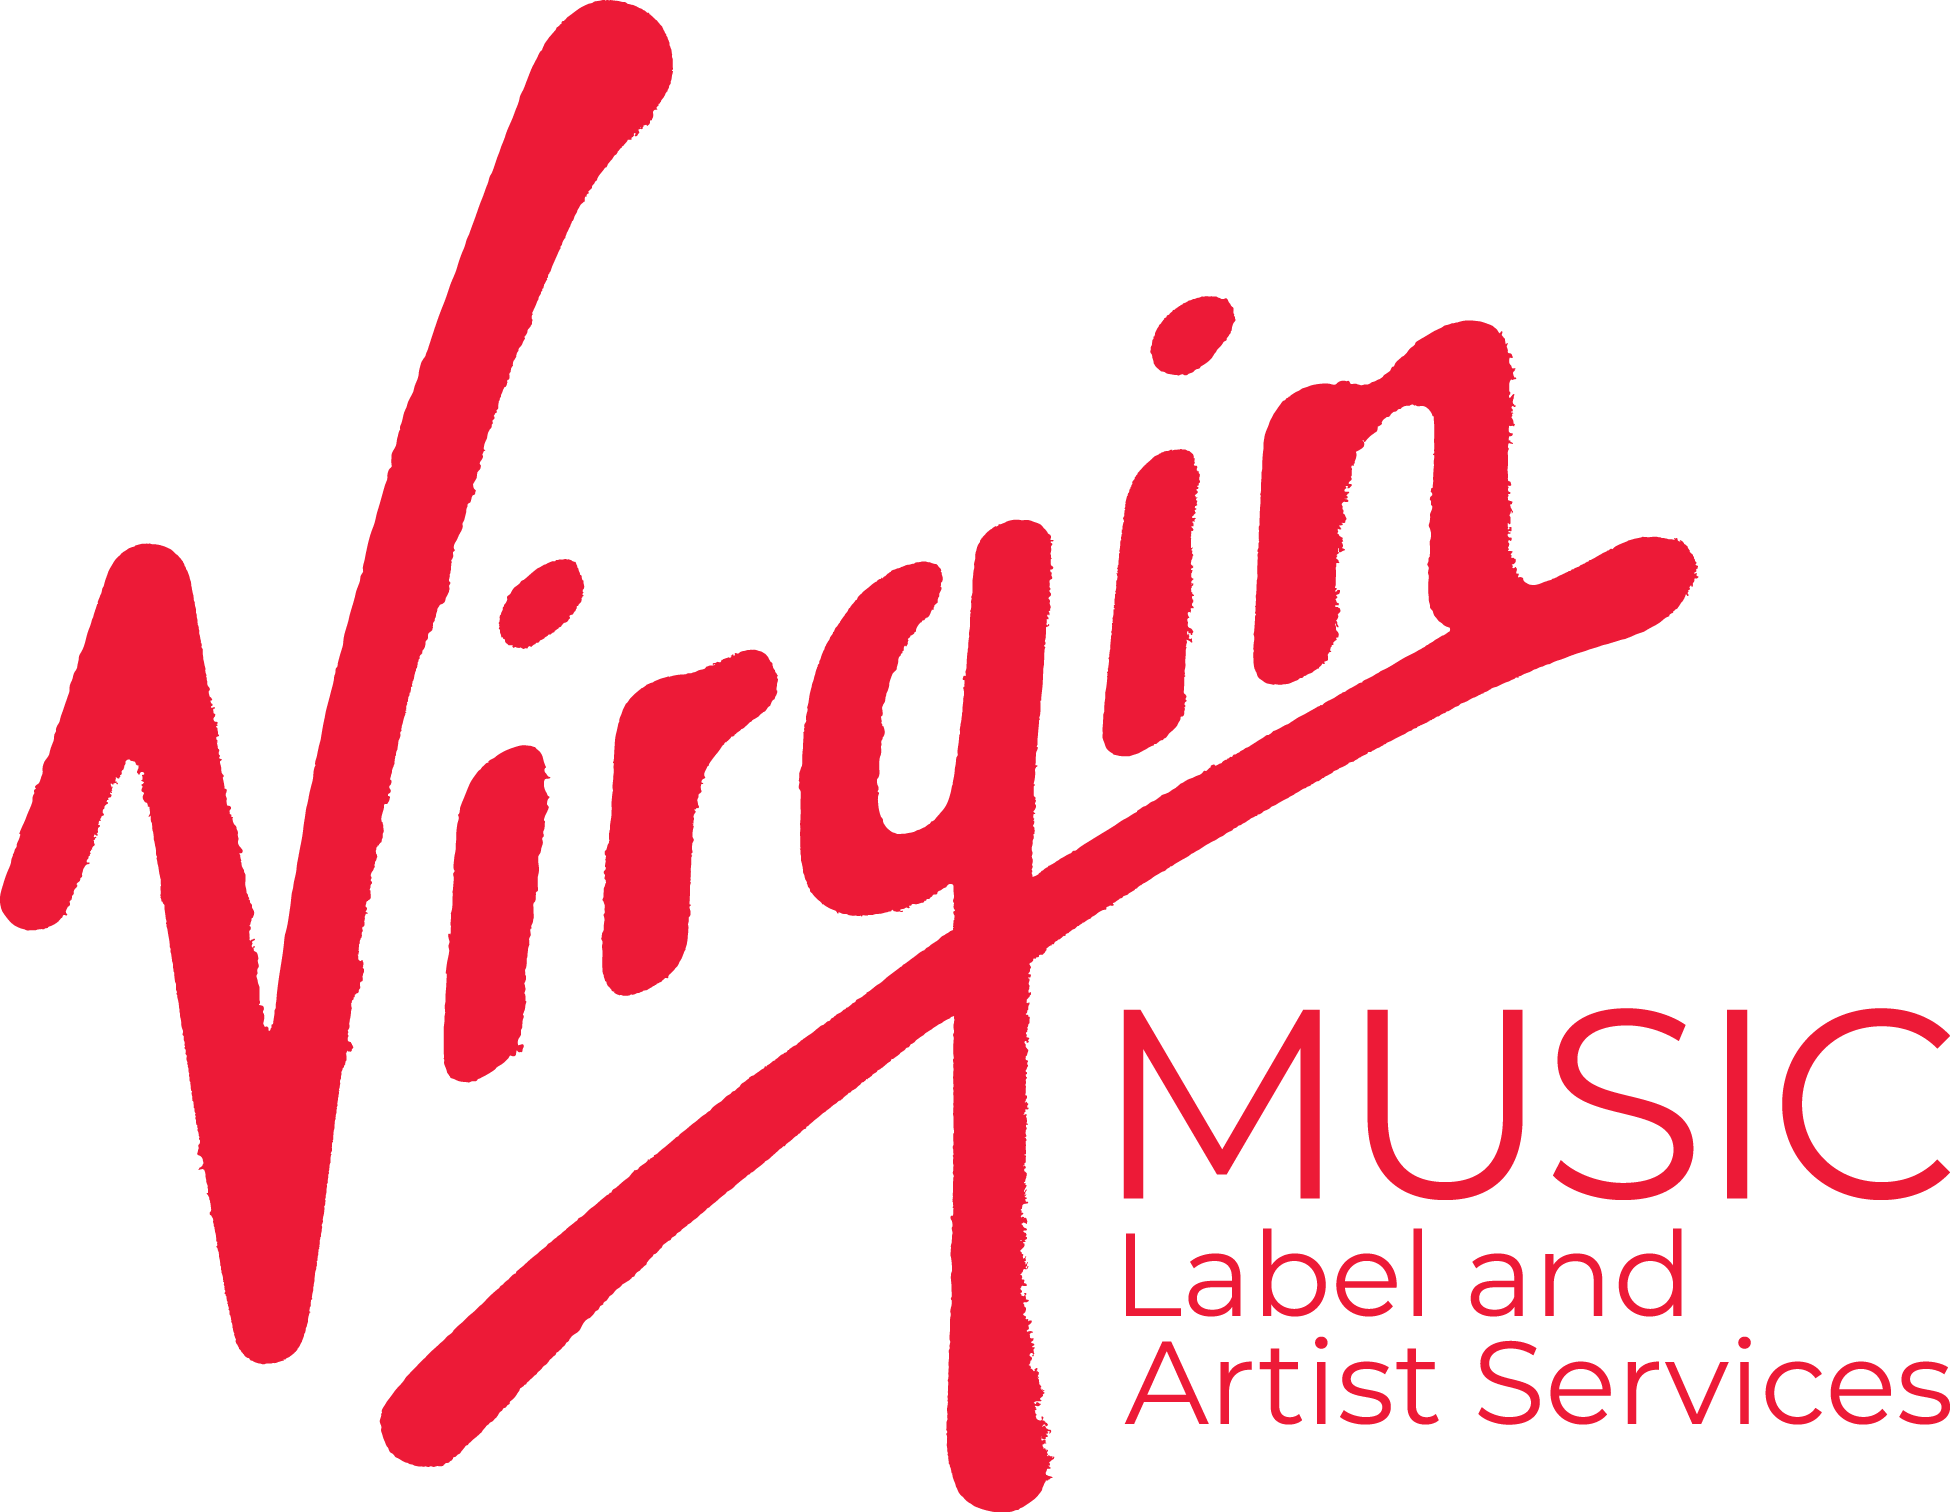 Virgin Music